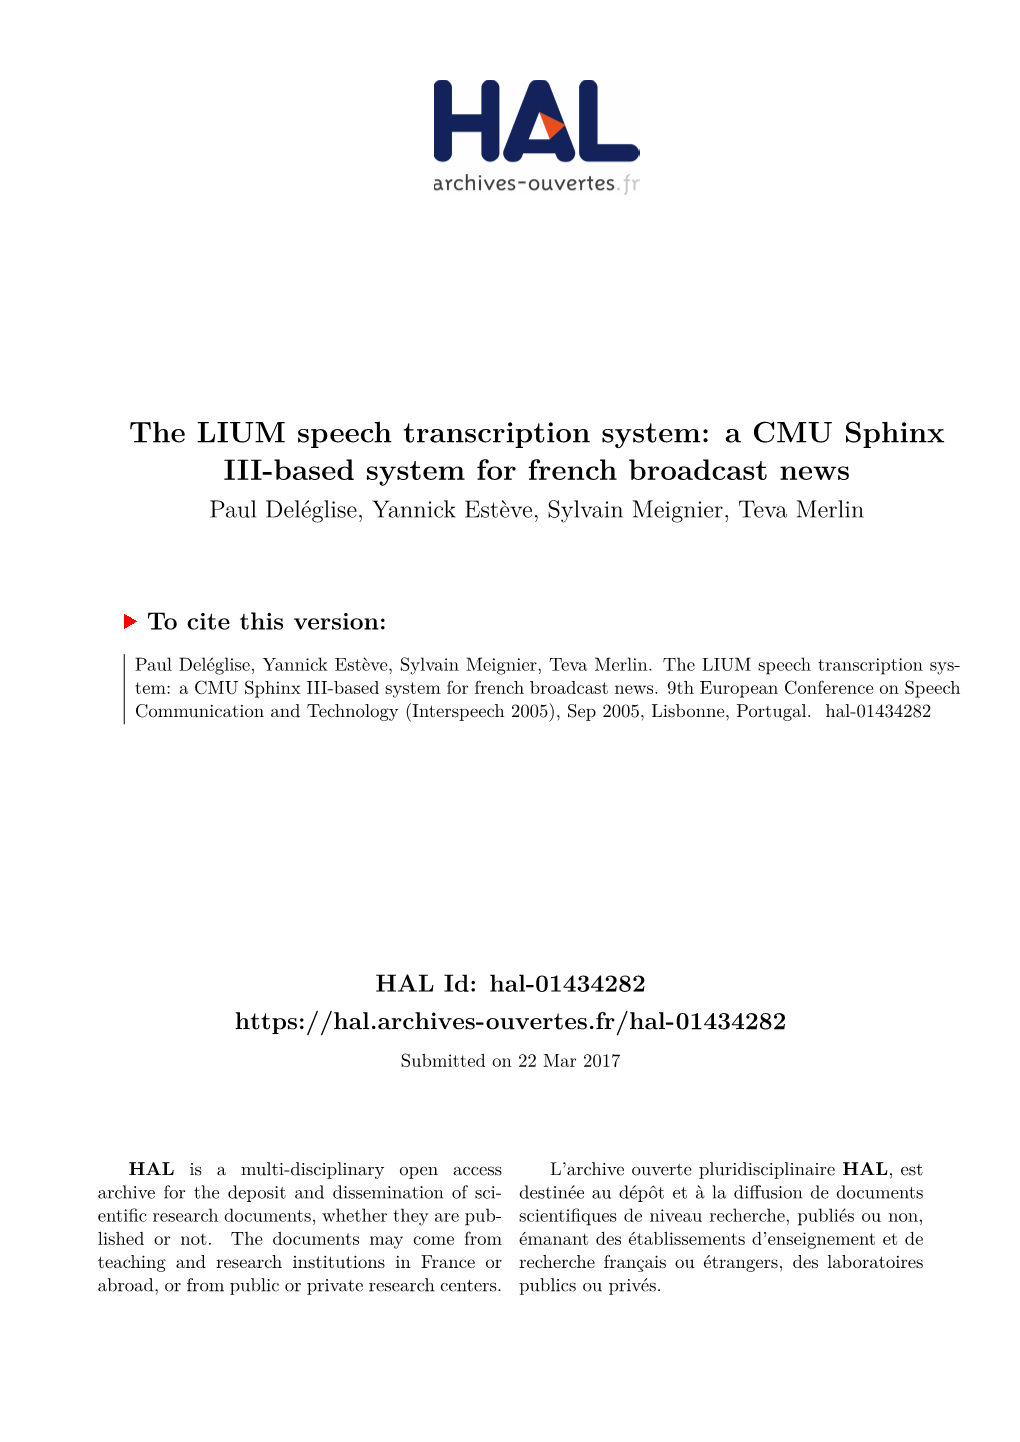 The LIUM Speech Transcription System: a CMU Sphinx III-Based System for French Broadcast News Paul Deléglise, Yannick Estève, Sylvain Meignier, Teva Merlin